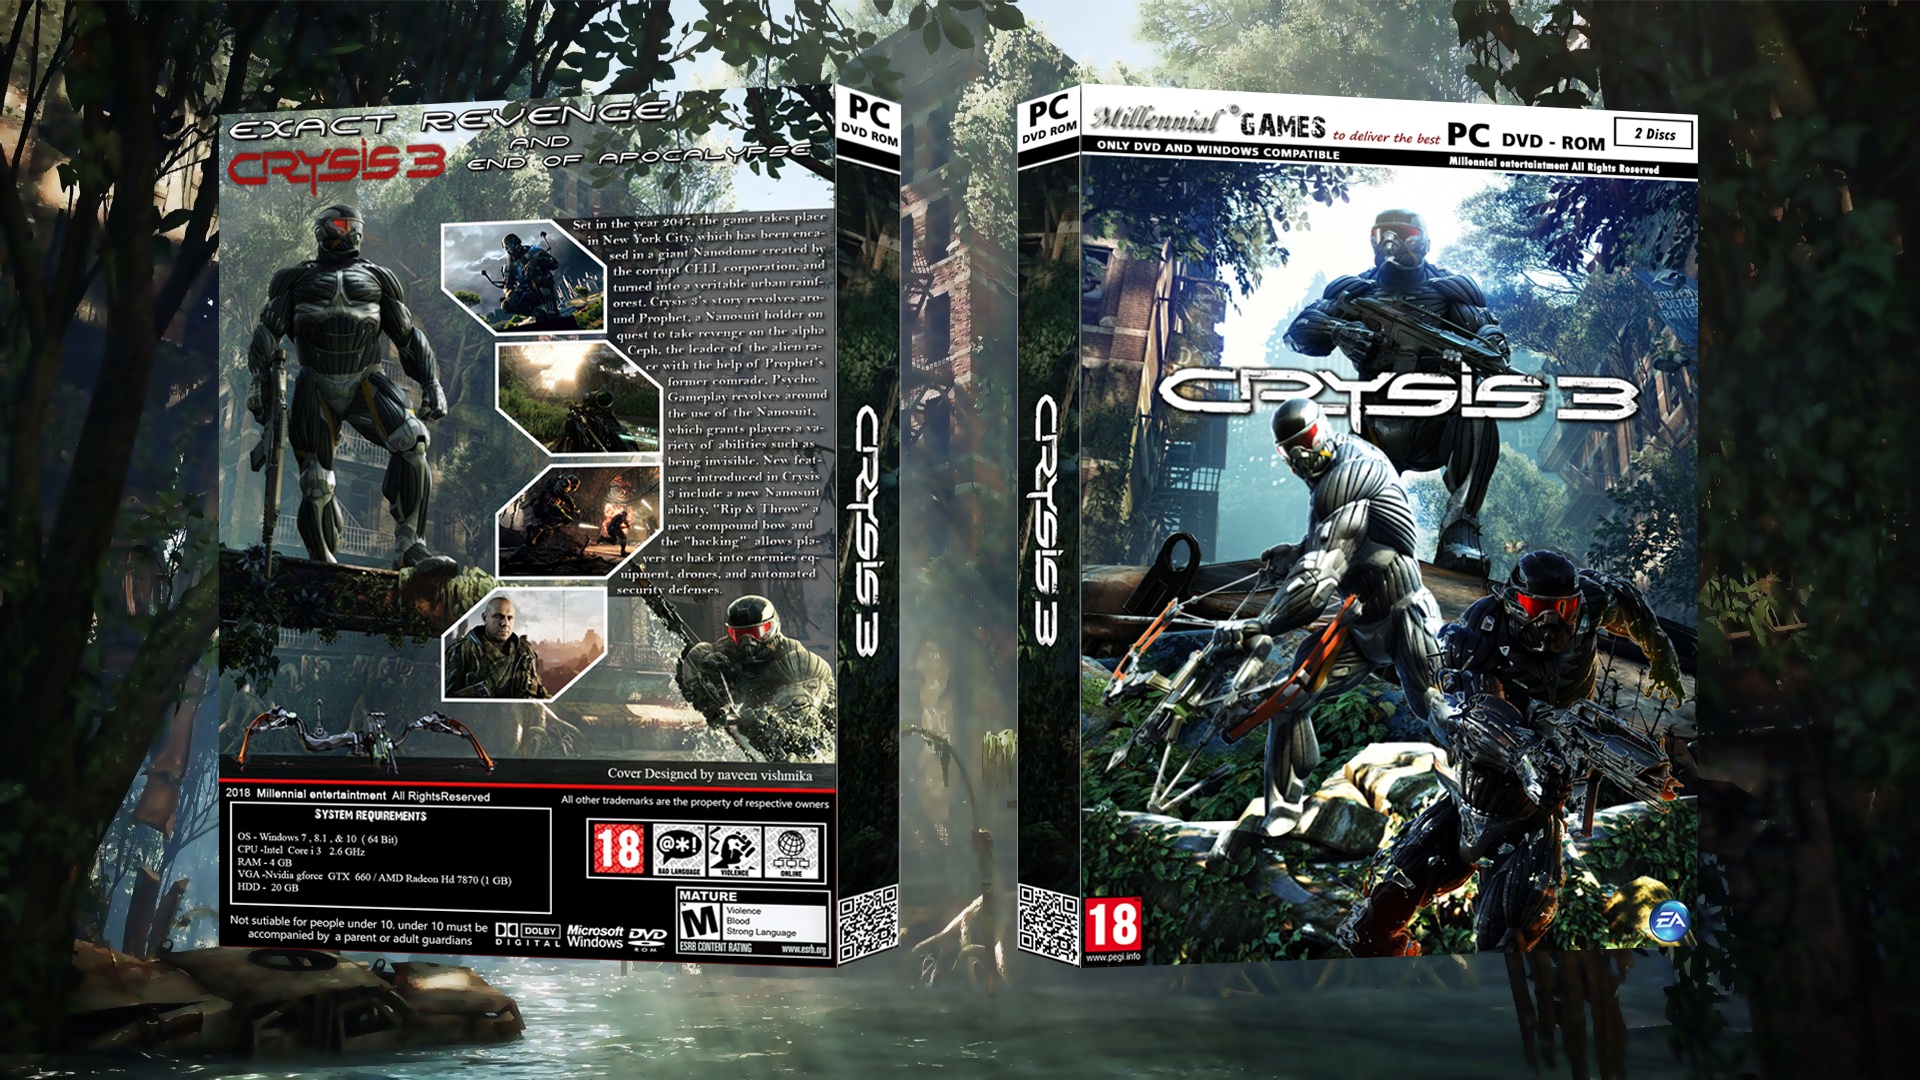 Crysis 3 box cover